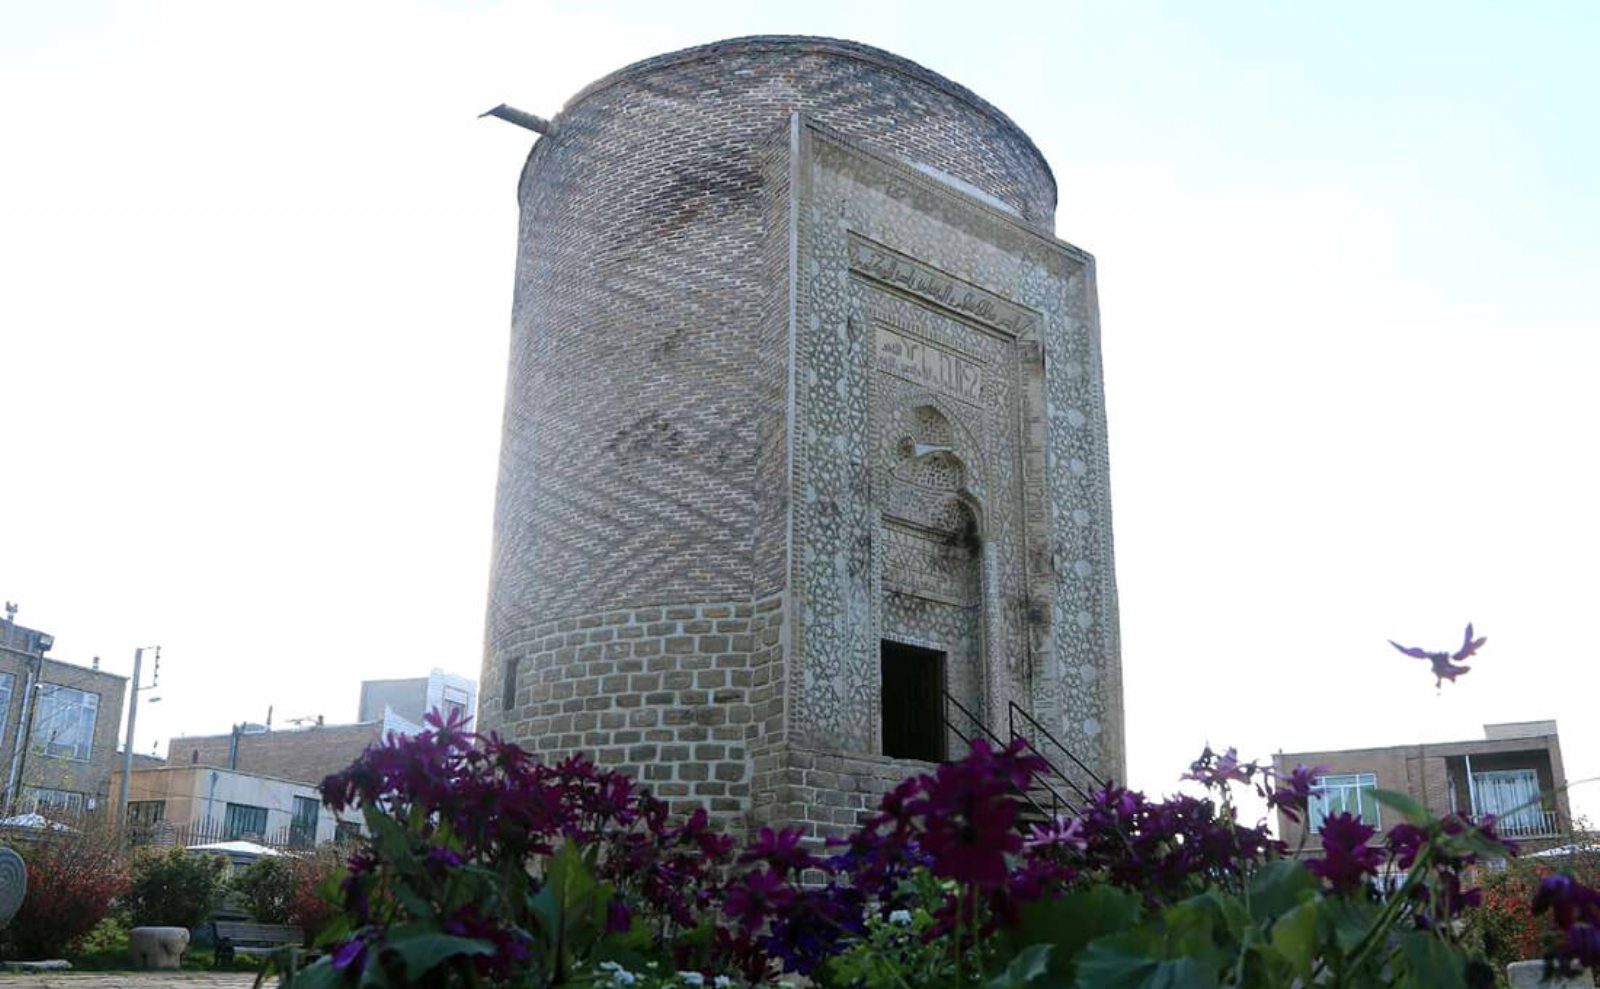 Segonbad: The Magnificent 12th Century Tomb Tower in Urmia, Iran